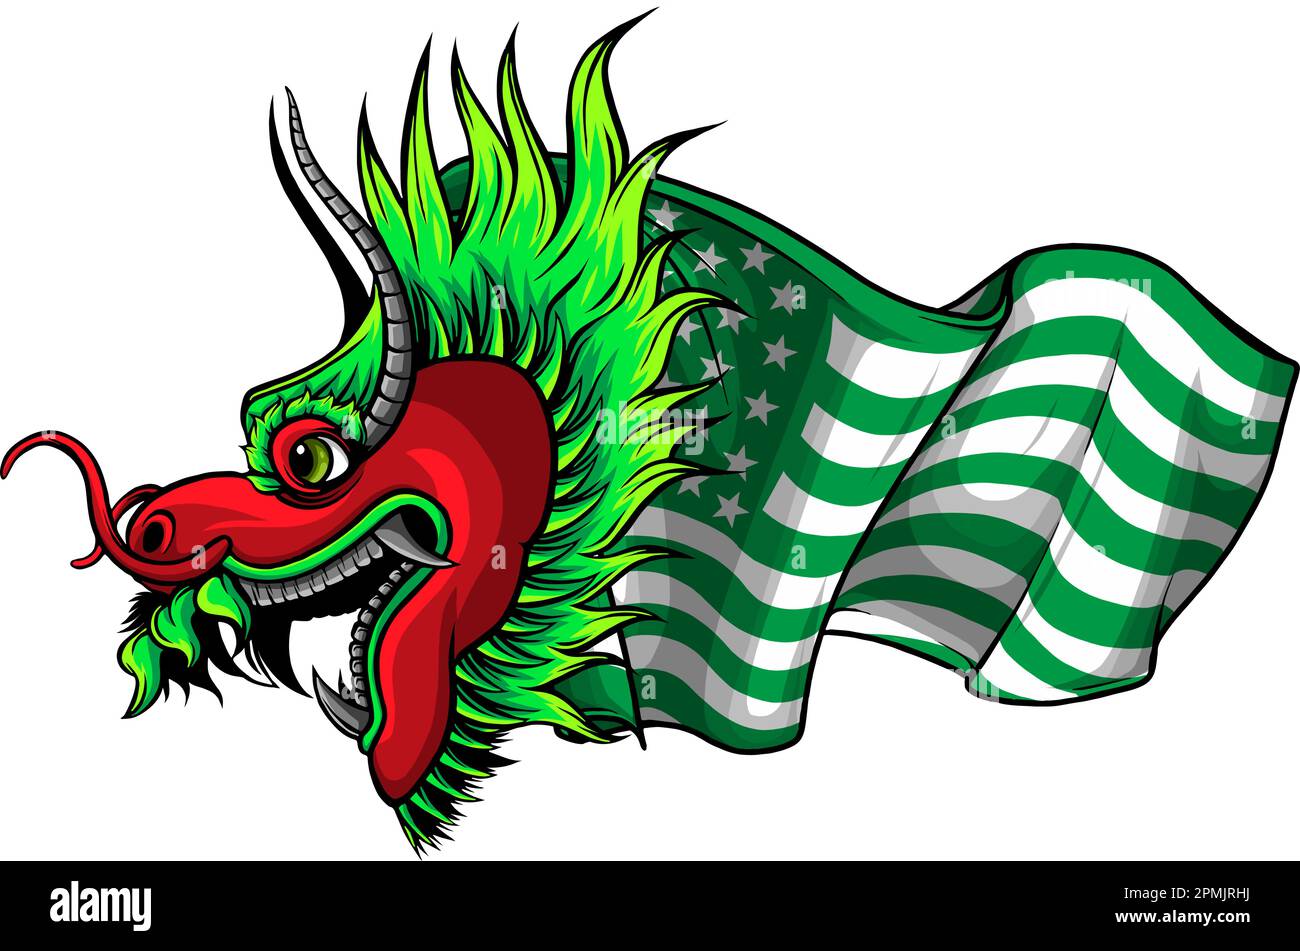 vector illustration of Dragon head logo. on white background Stock Vector